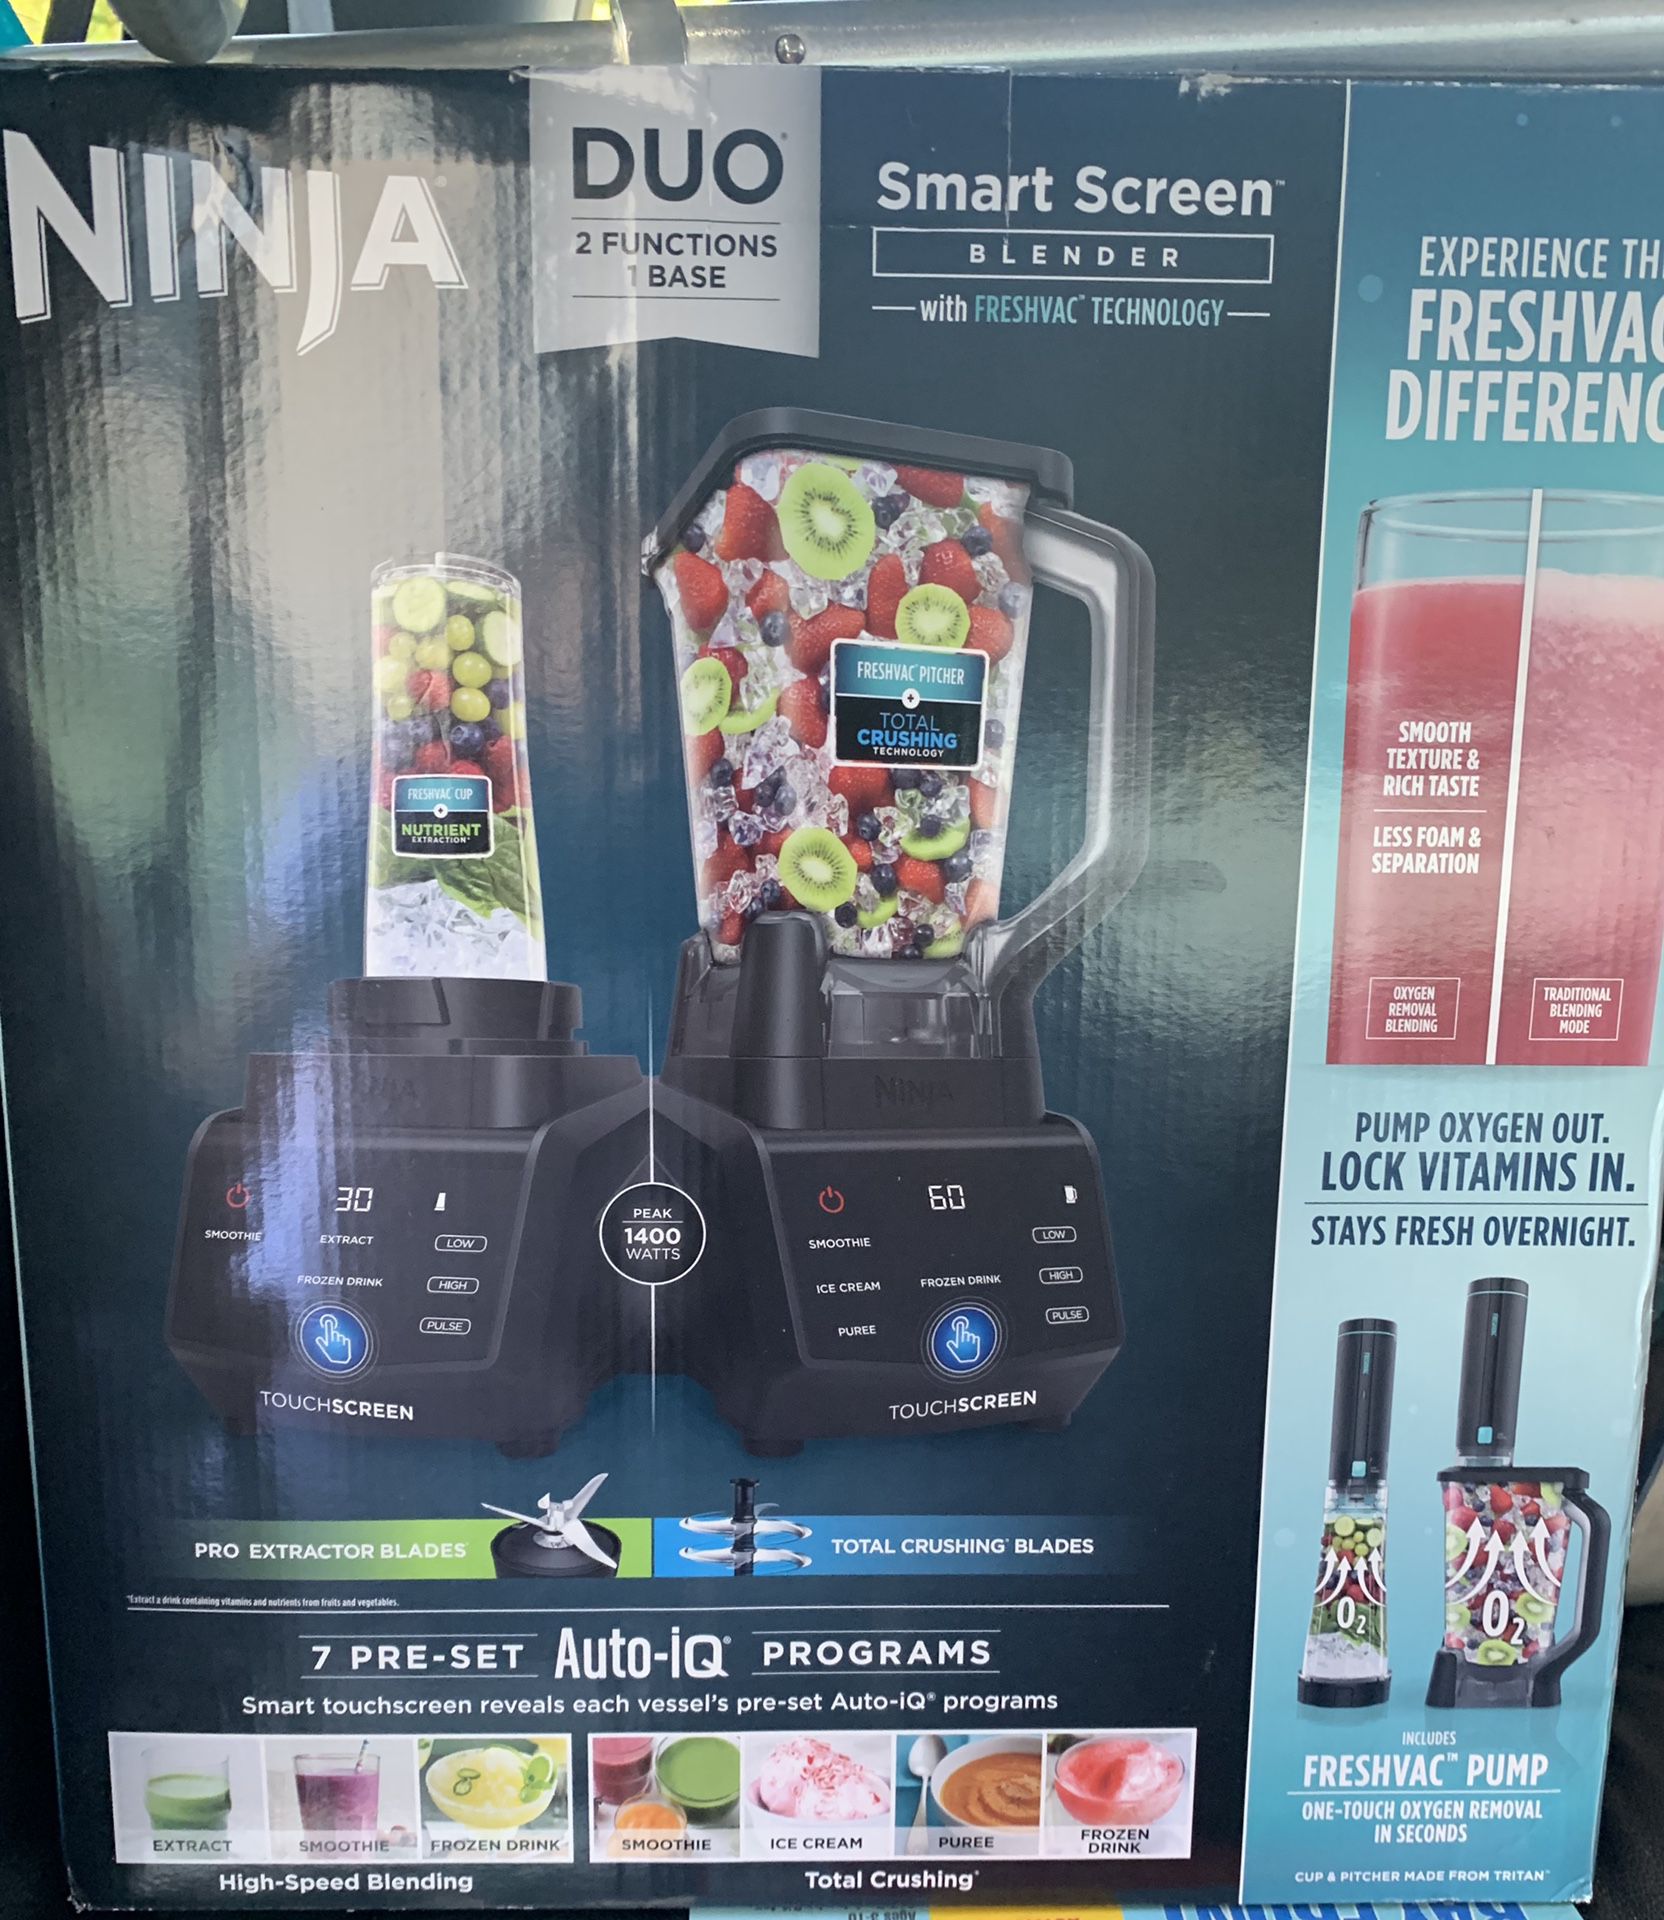 Ninja Duo Smart Screen Blender with freshvac